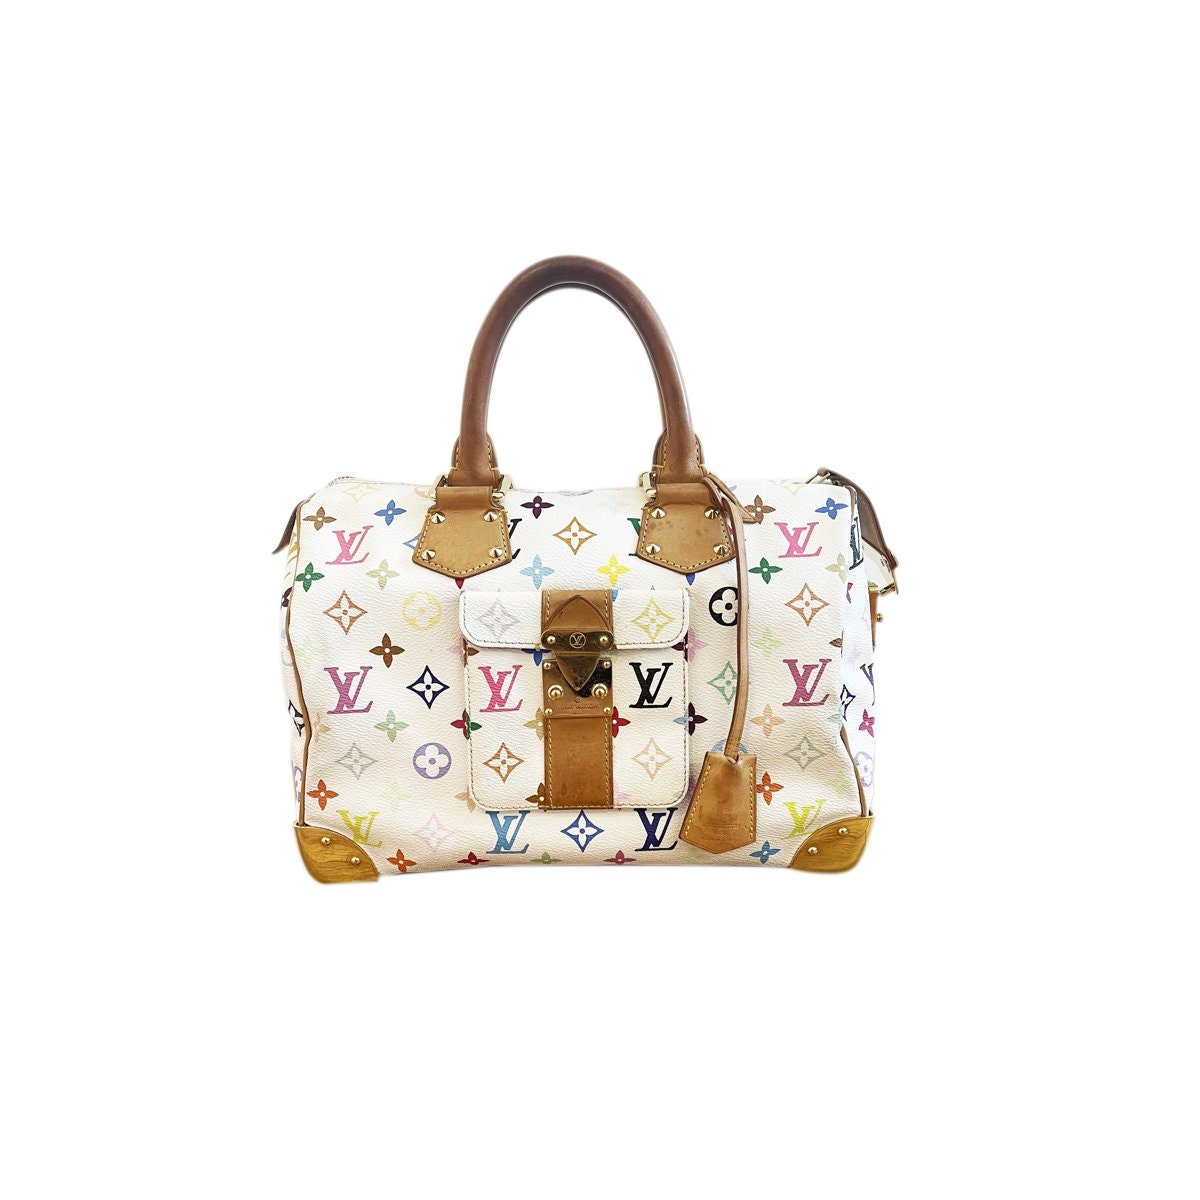 Buy Vintage Louis Vuitton White Multicolor Bag Online In India